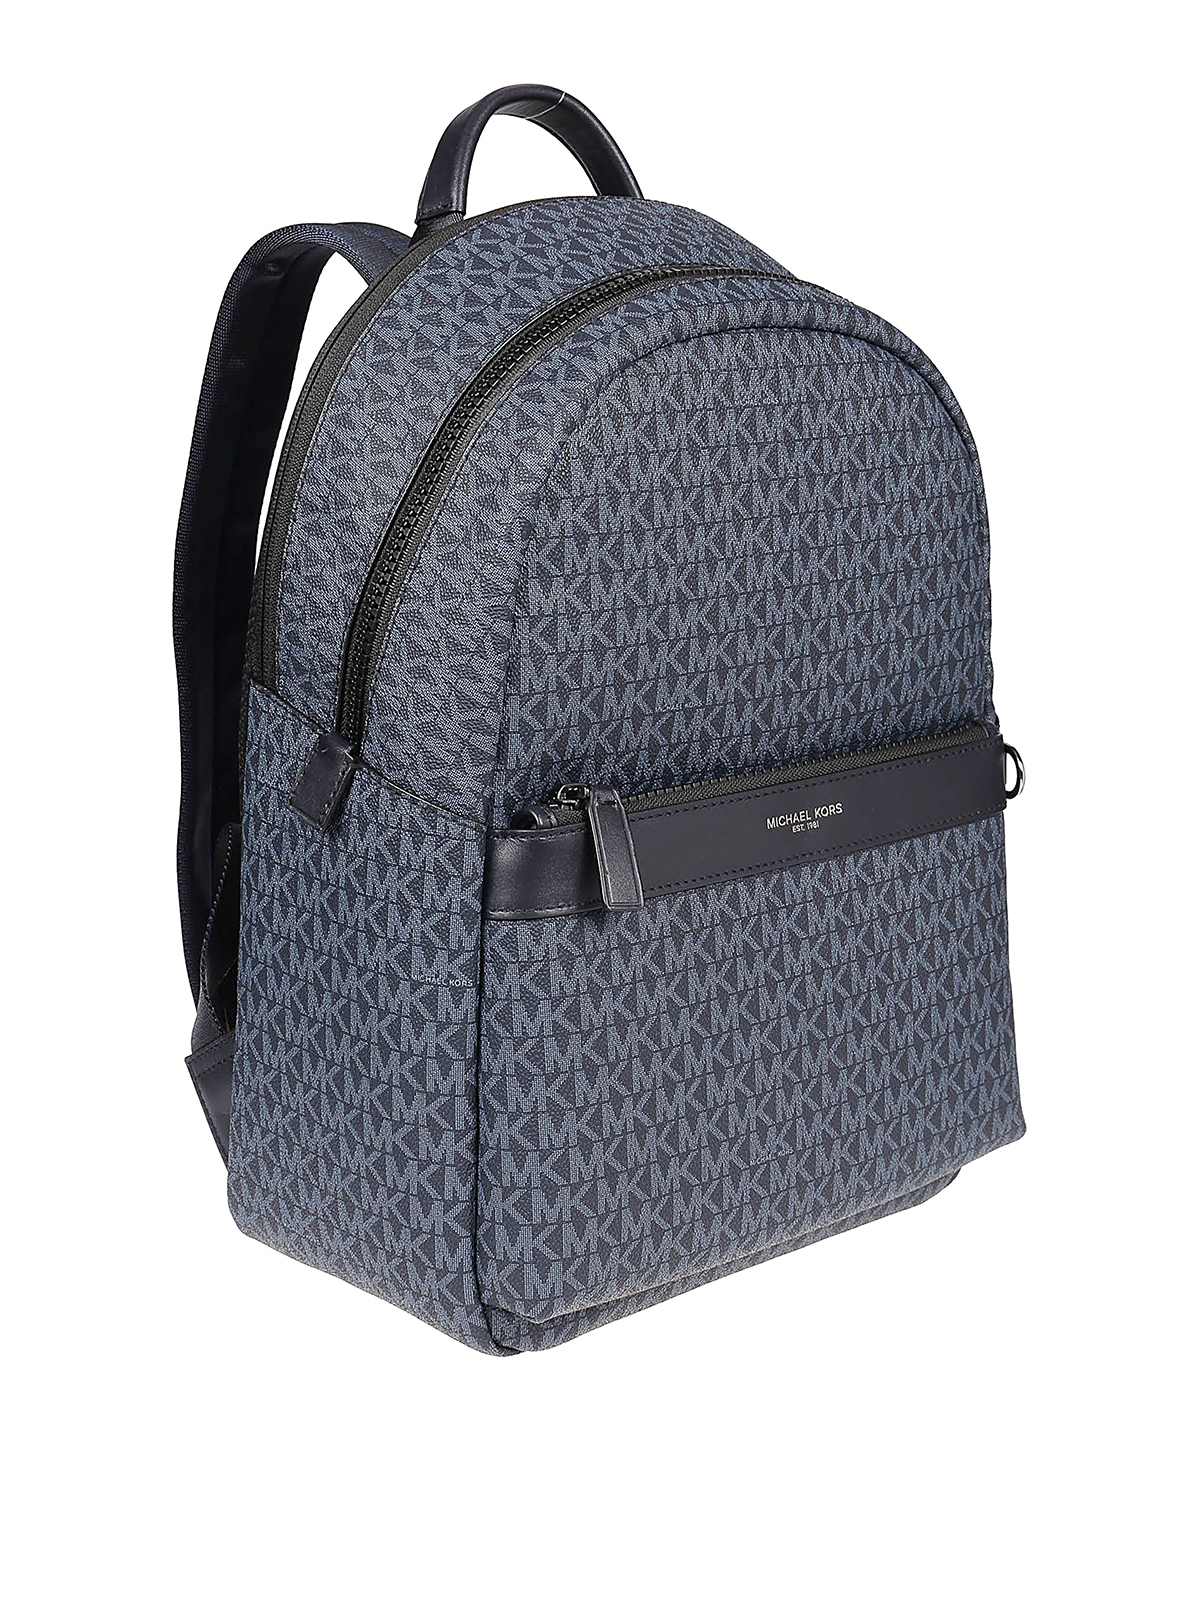 grey michael kors backpack